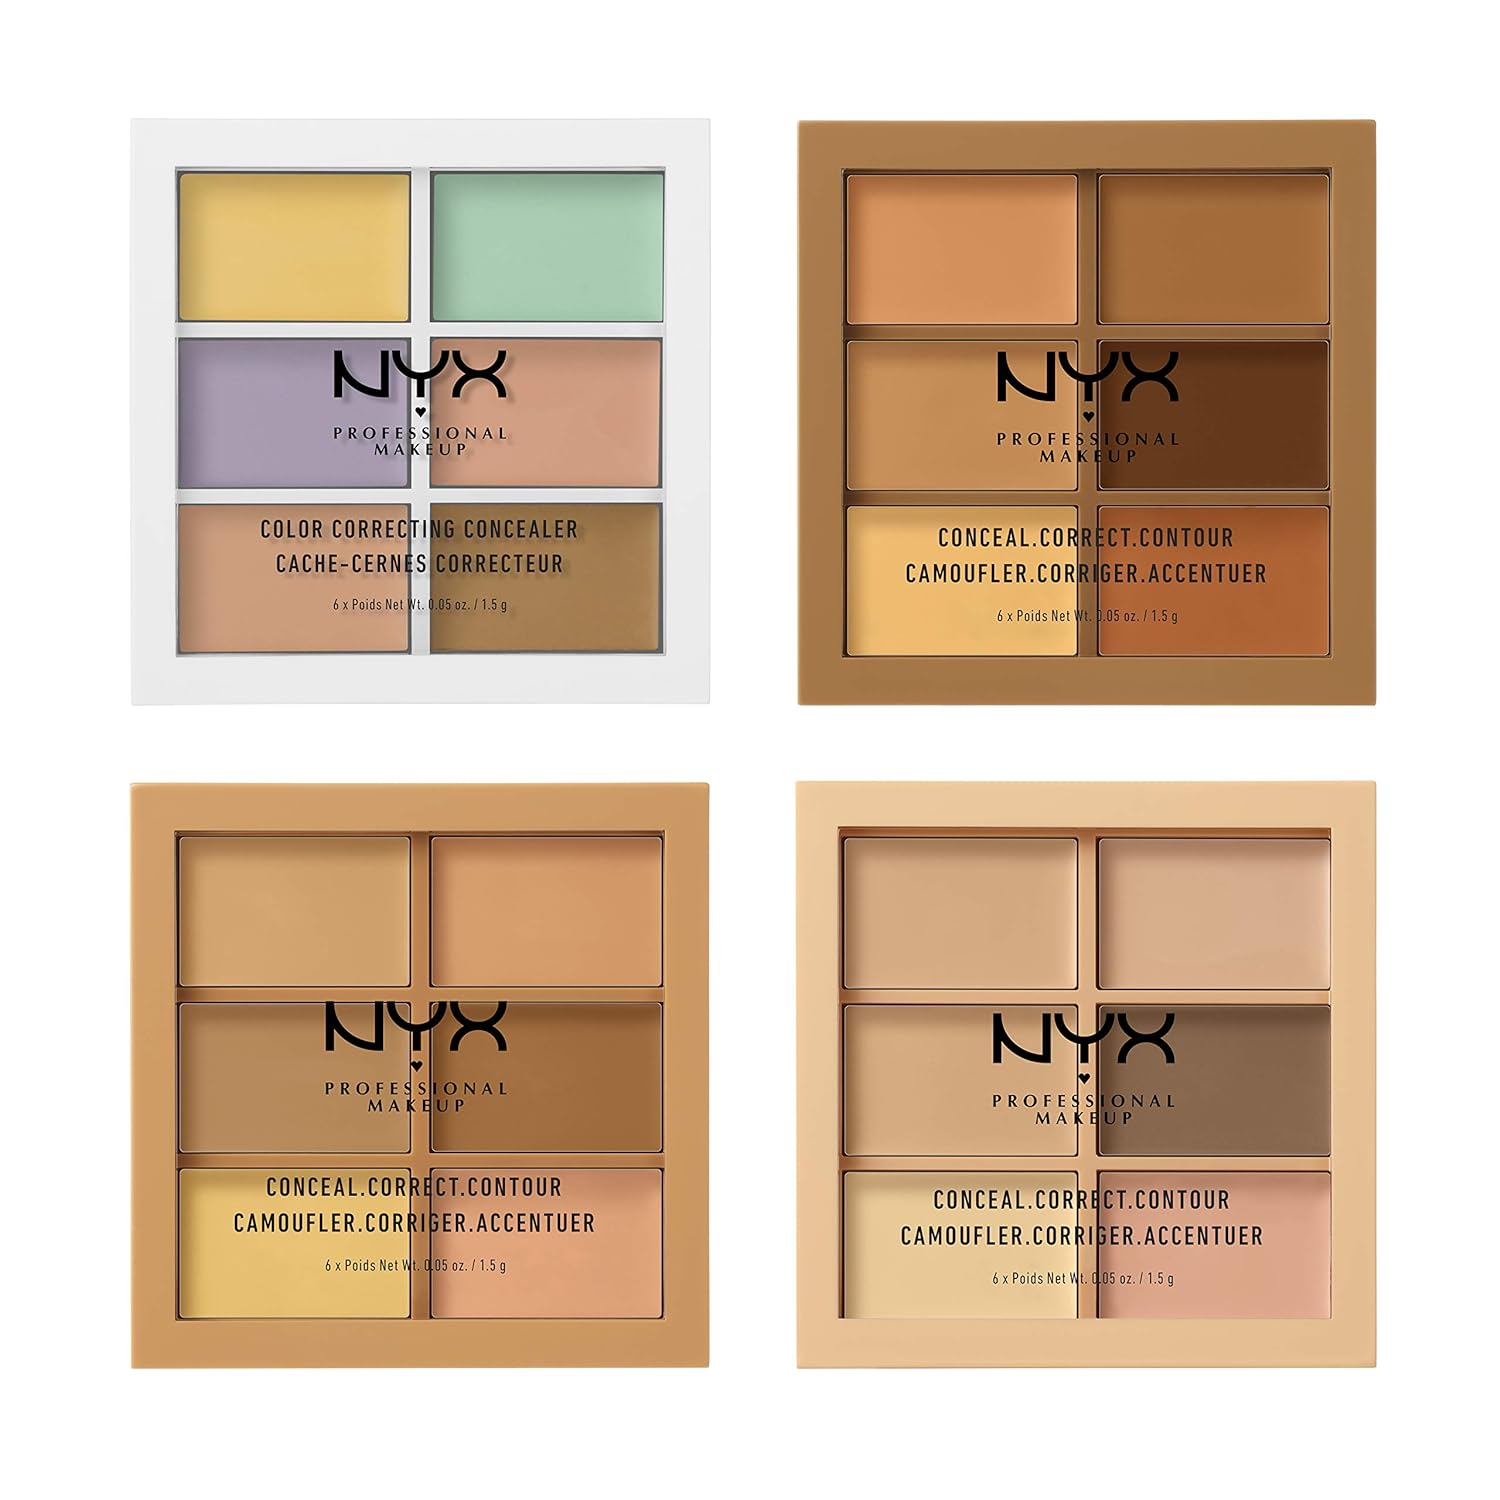  NYX PROFESSIONAL MAKEUP Concealer Color Correcting Palette